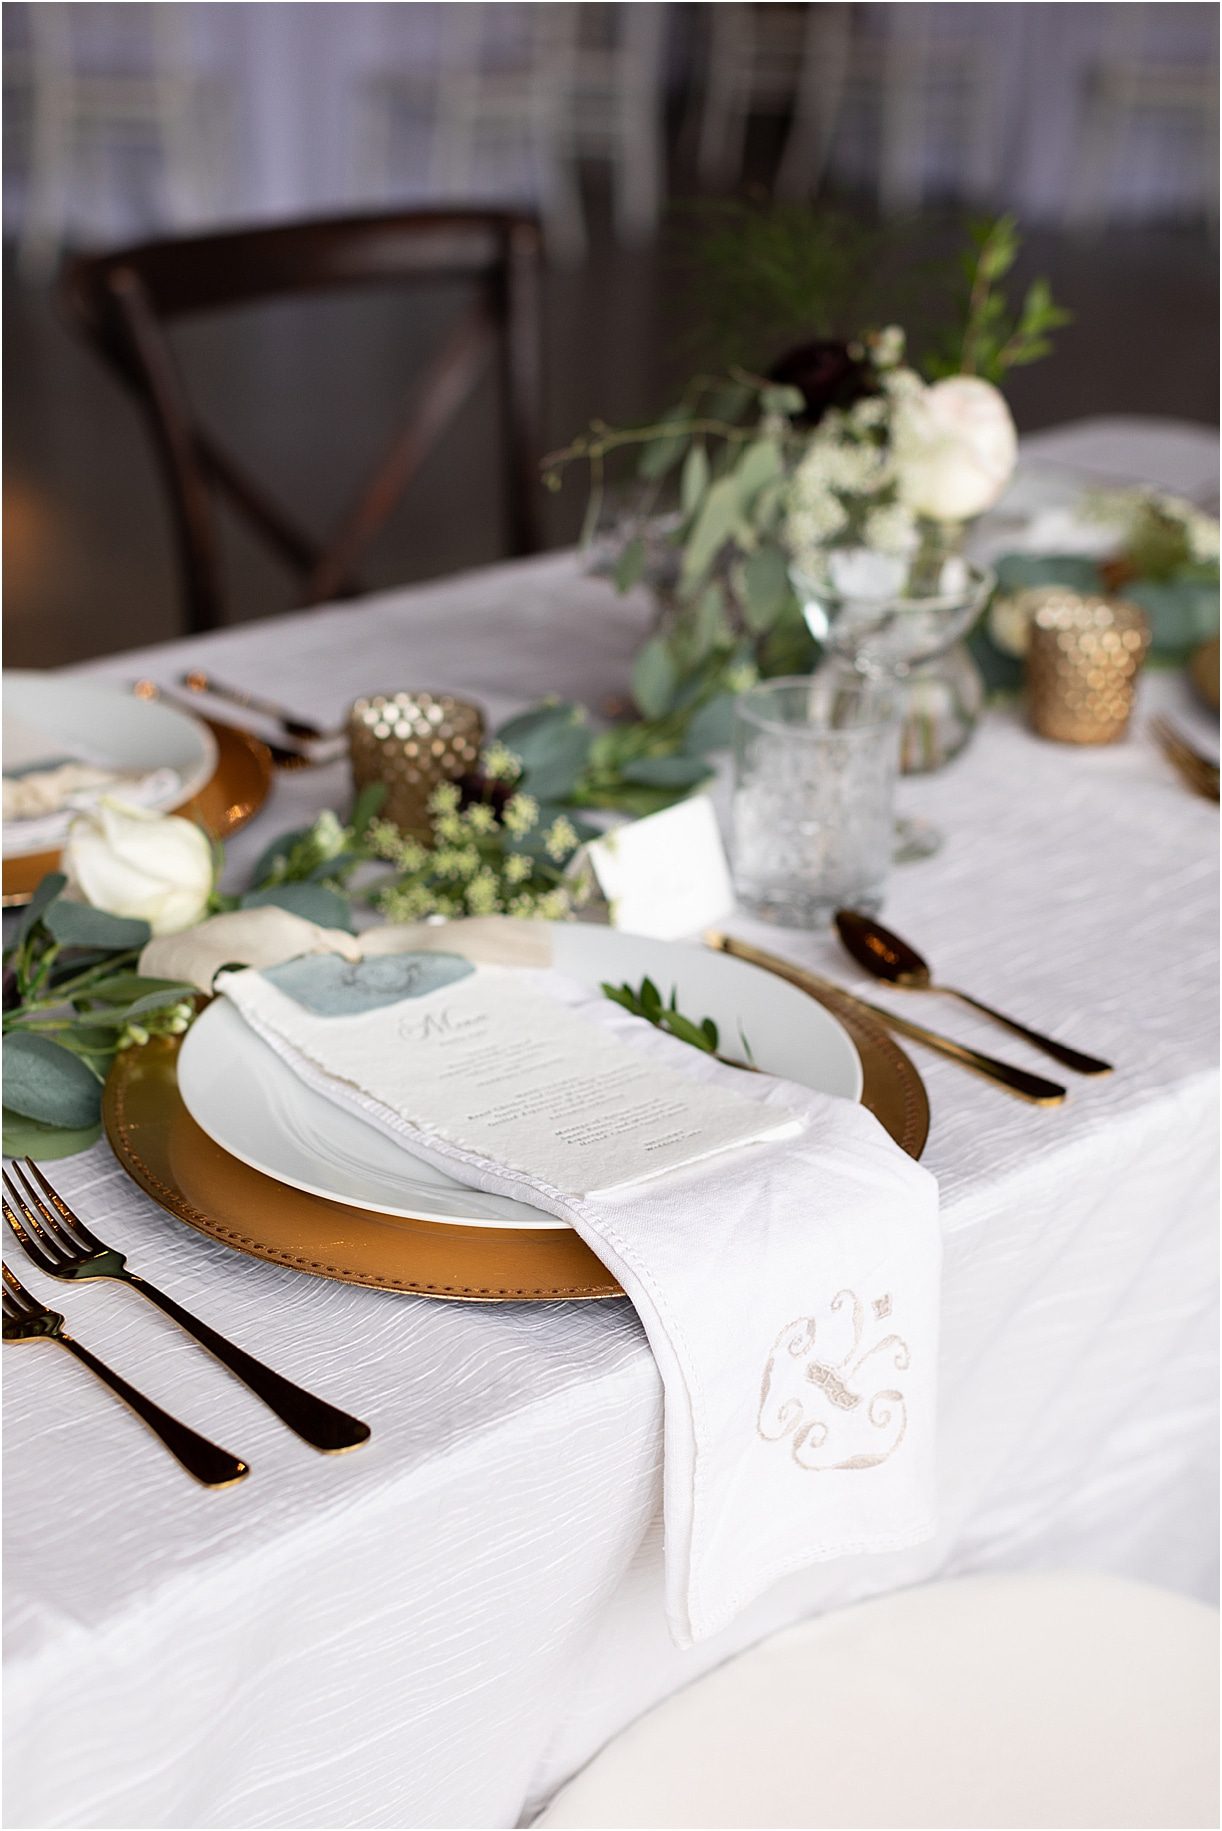 Steel Blue and Burgundy Virginia Wedding | Hill City Bride Wedding Ideas Blog Reception Table Menu Decor